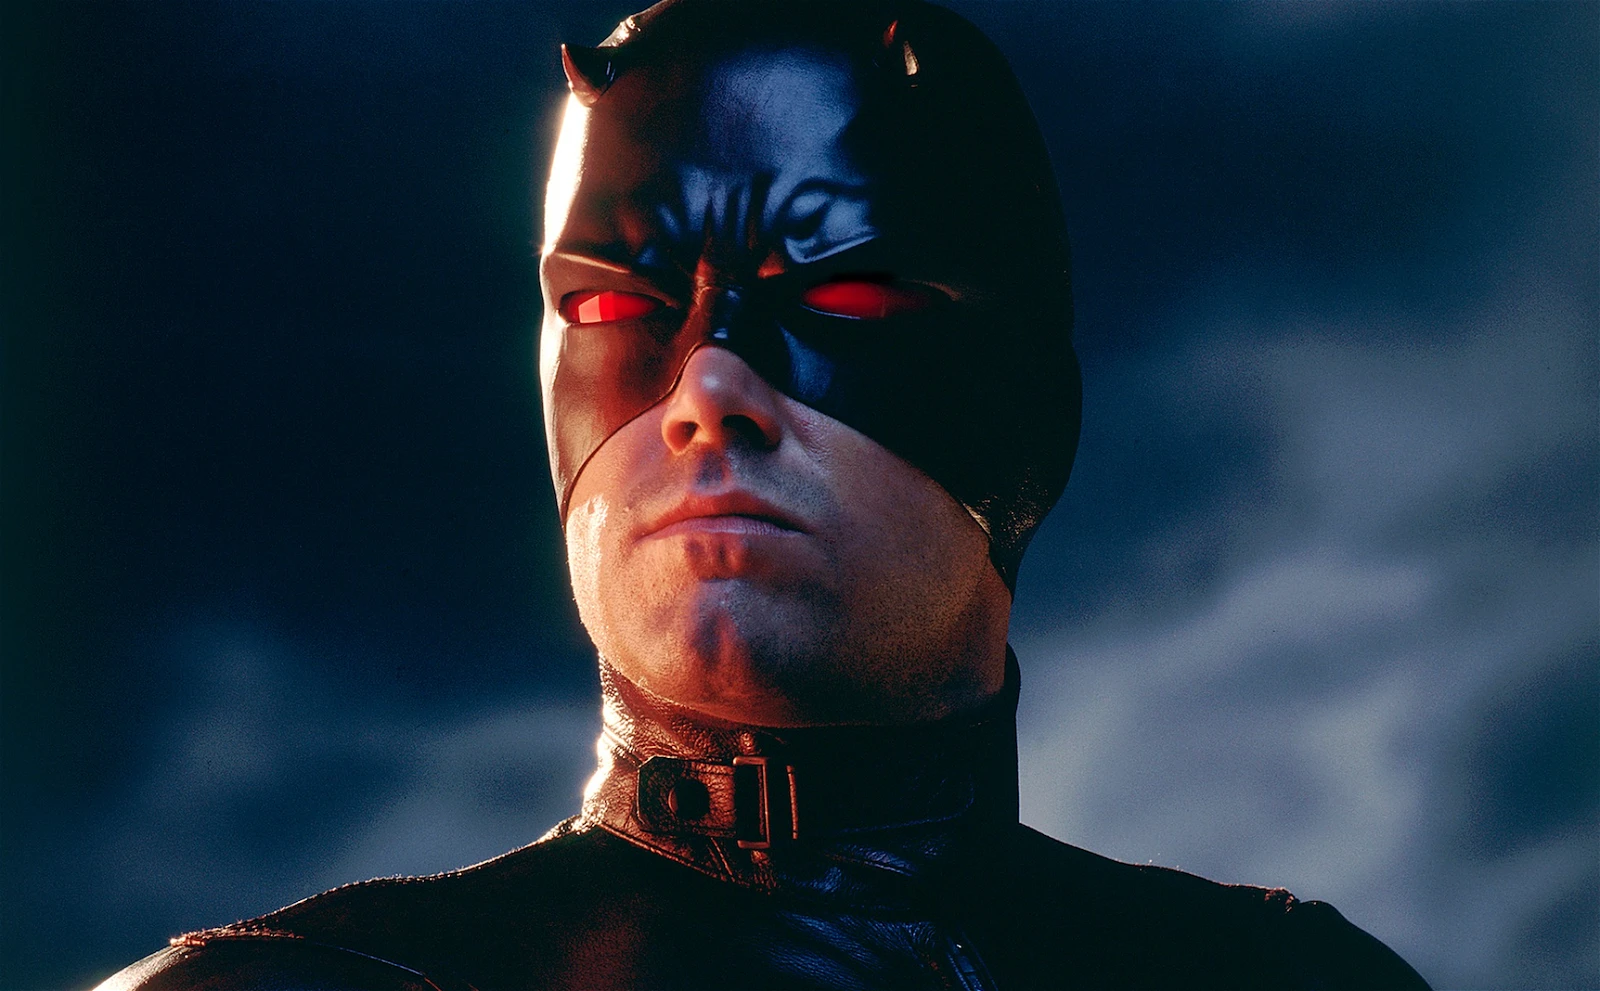 Ben Affleck as Daredevil 